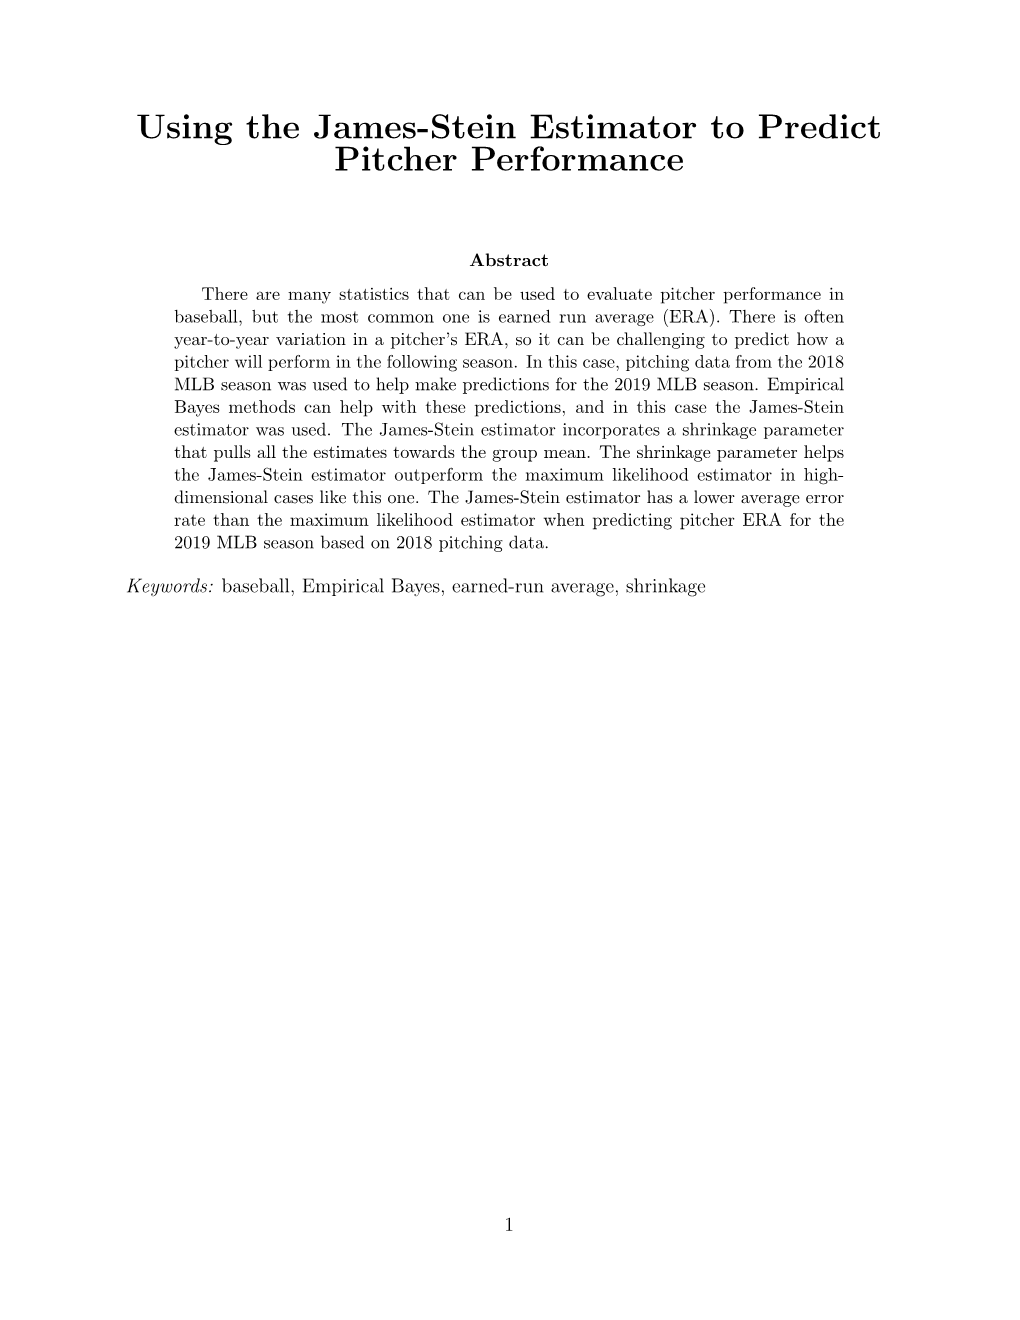 Using the James-Stein Estimator to Predict Pitcher Performance